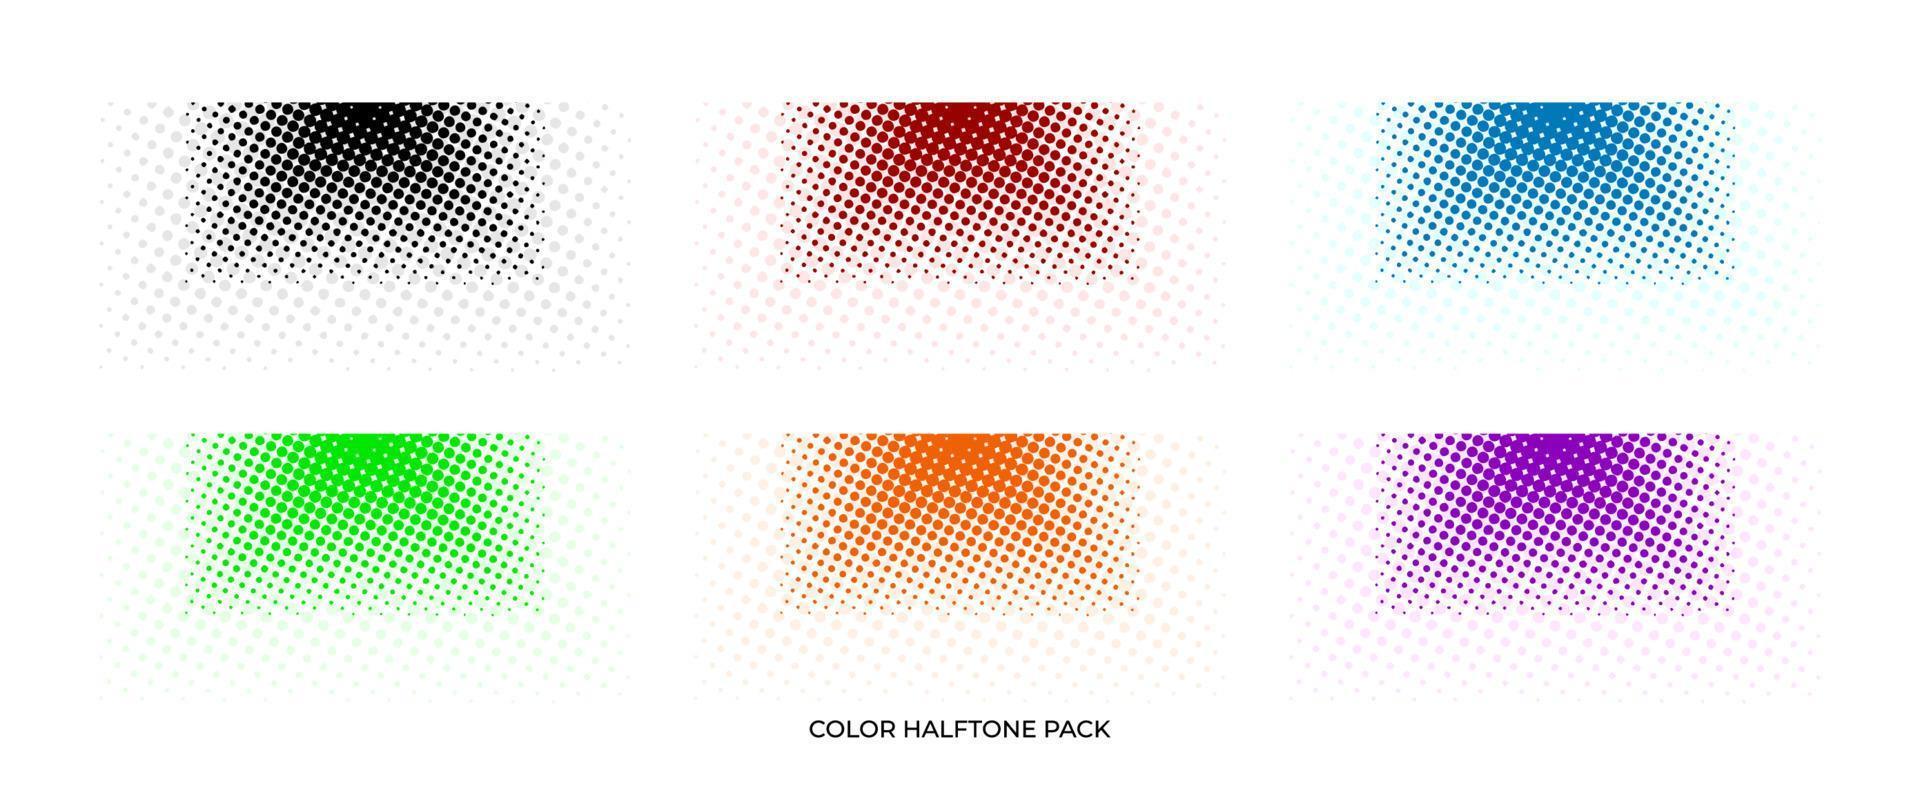 illustration vector graphic of color halftone, halftone pack, ornament, dot pixels, etc